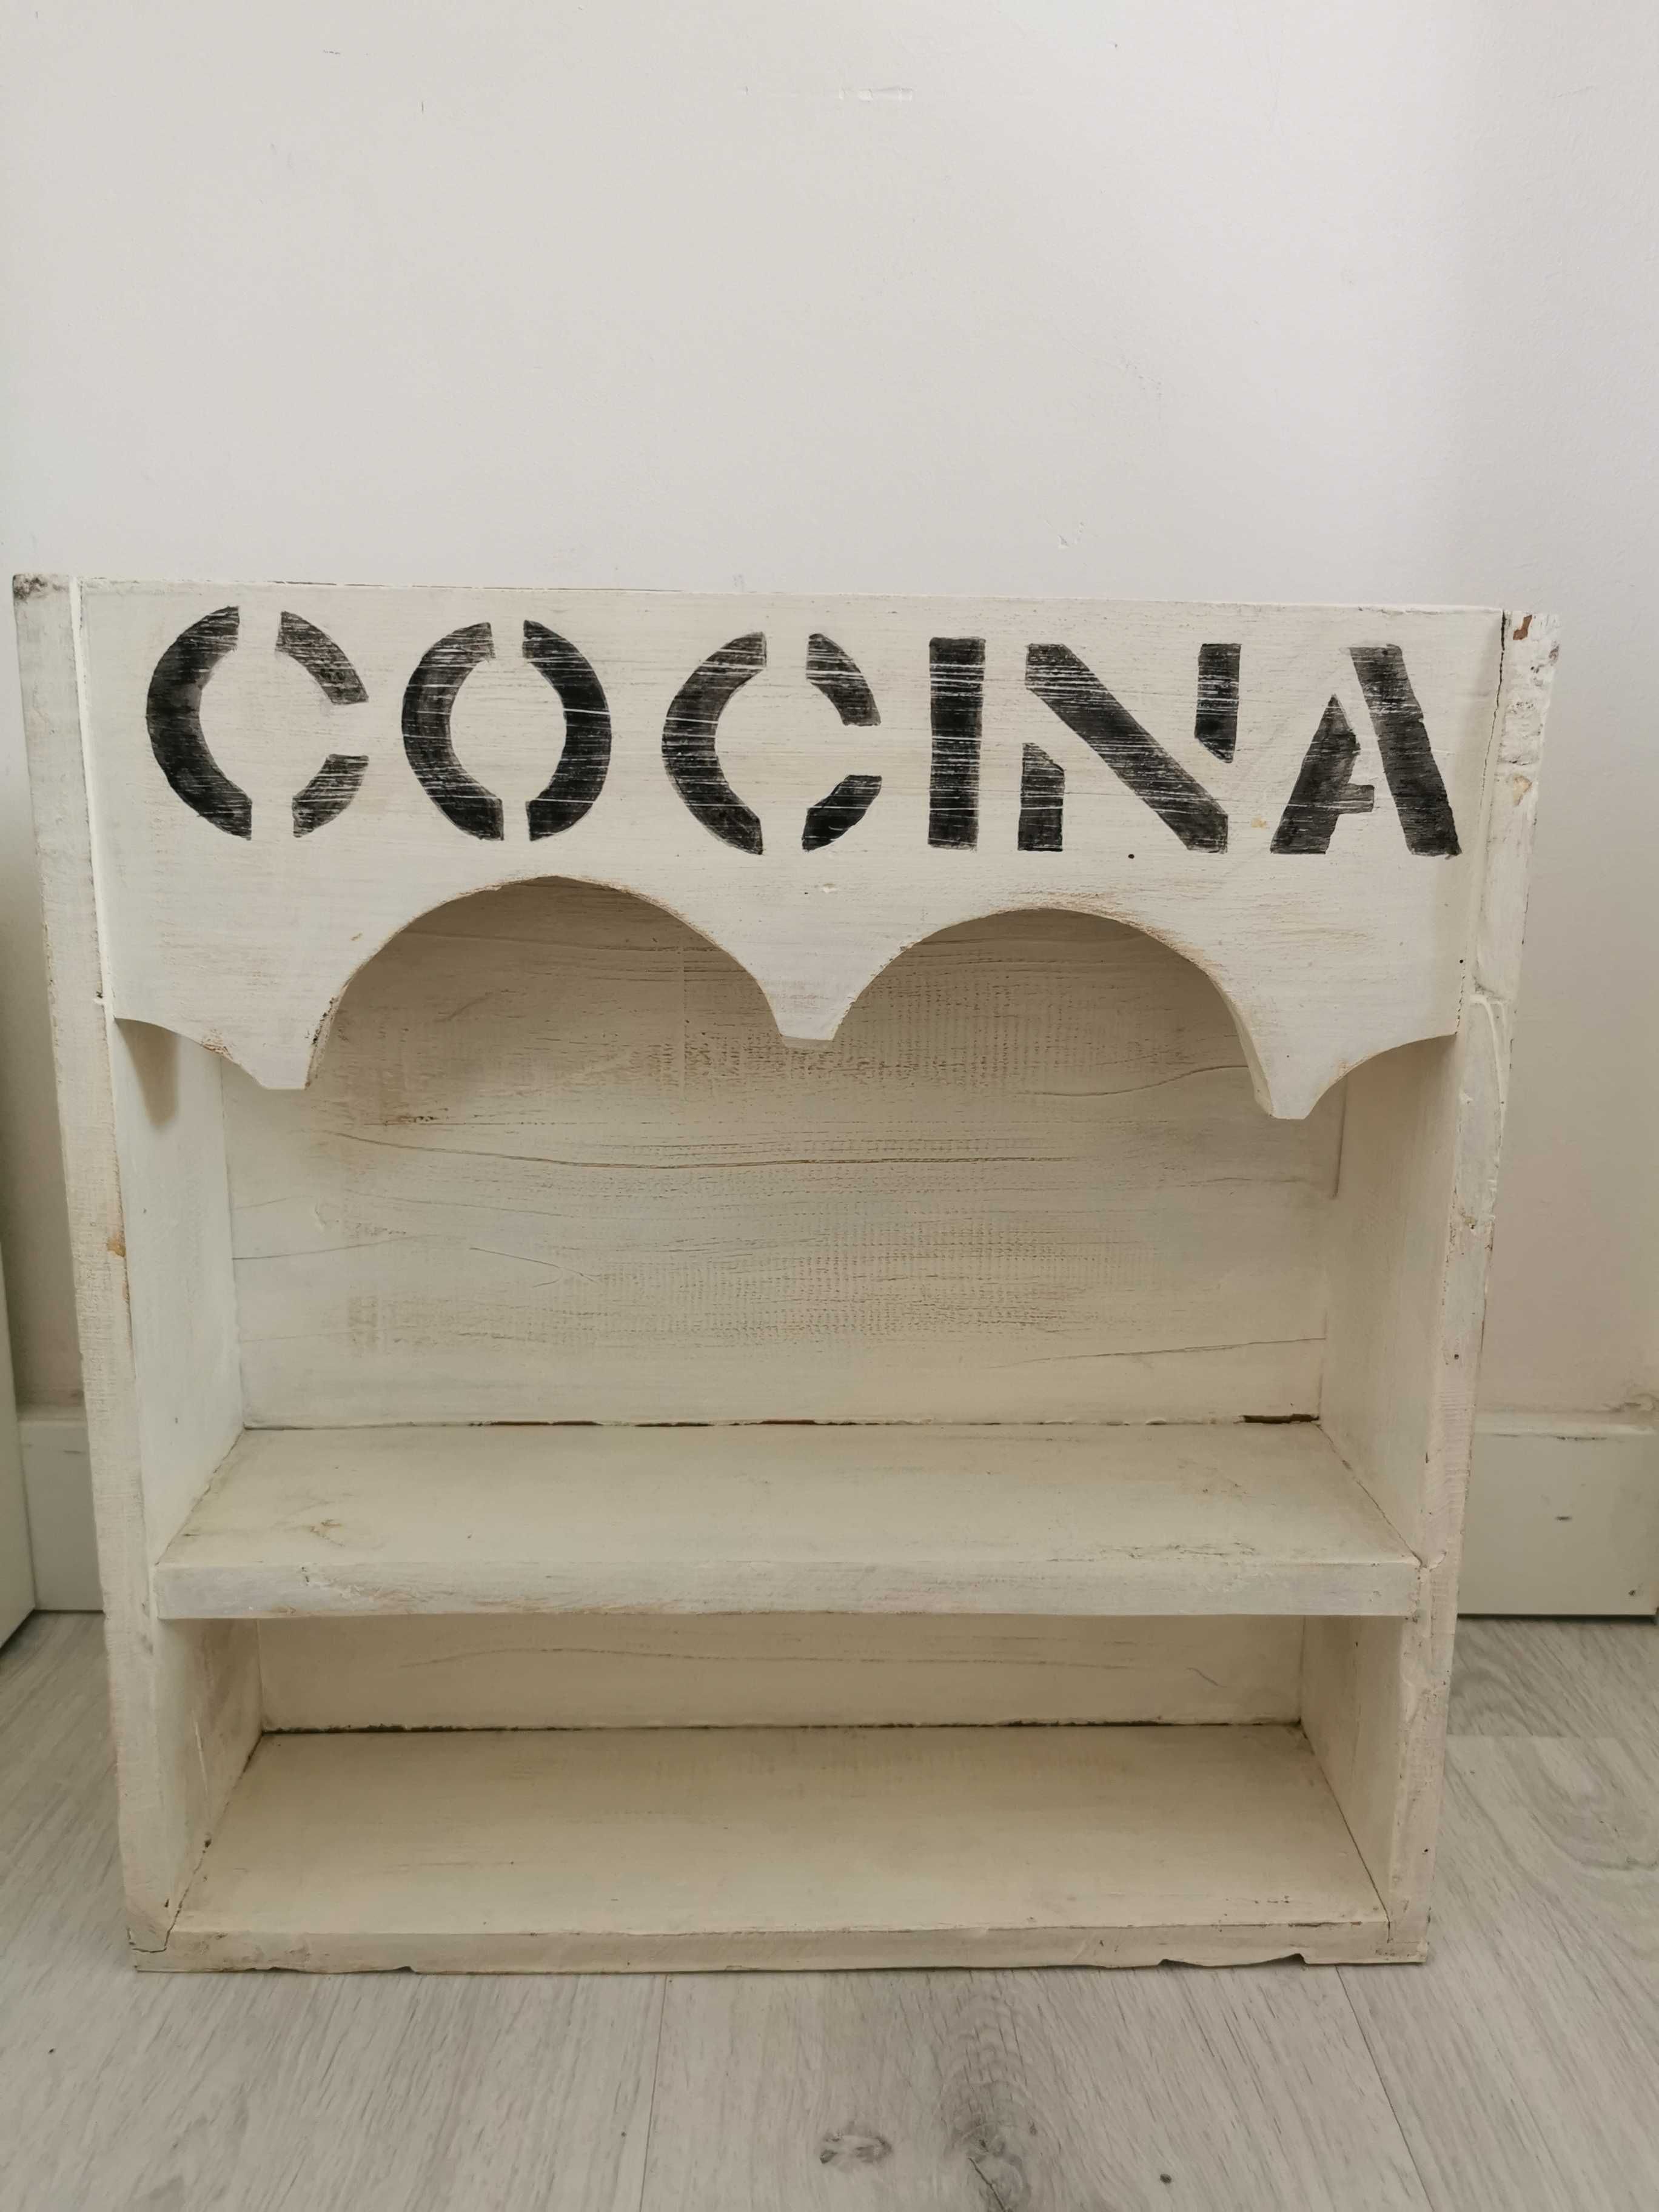 Estante artesanal italiana COCINA